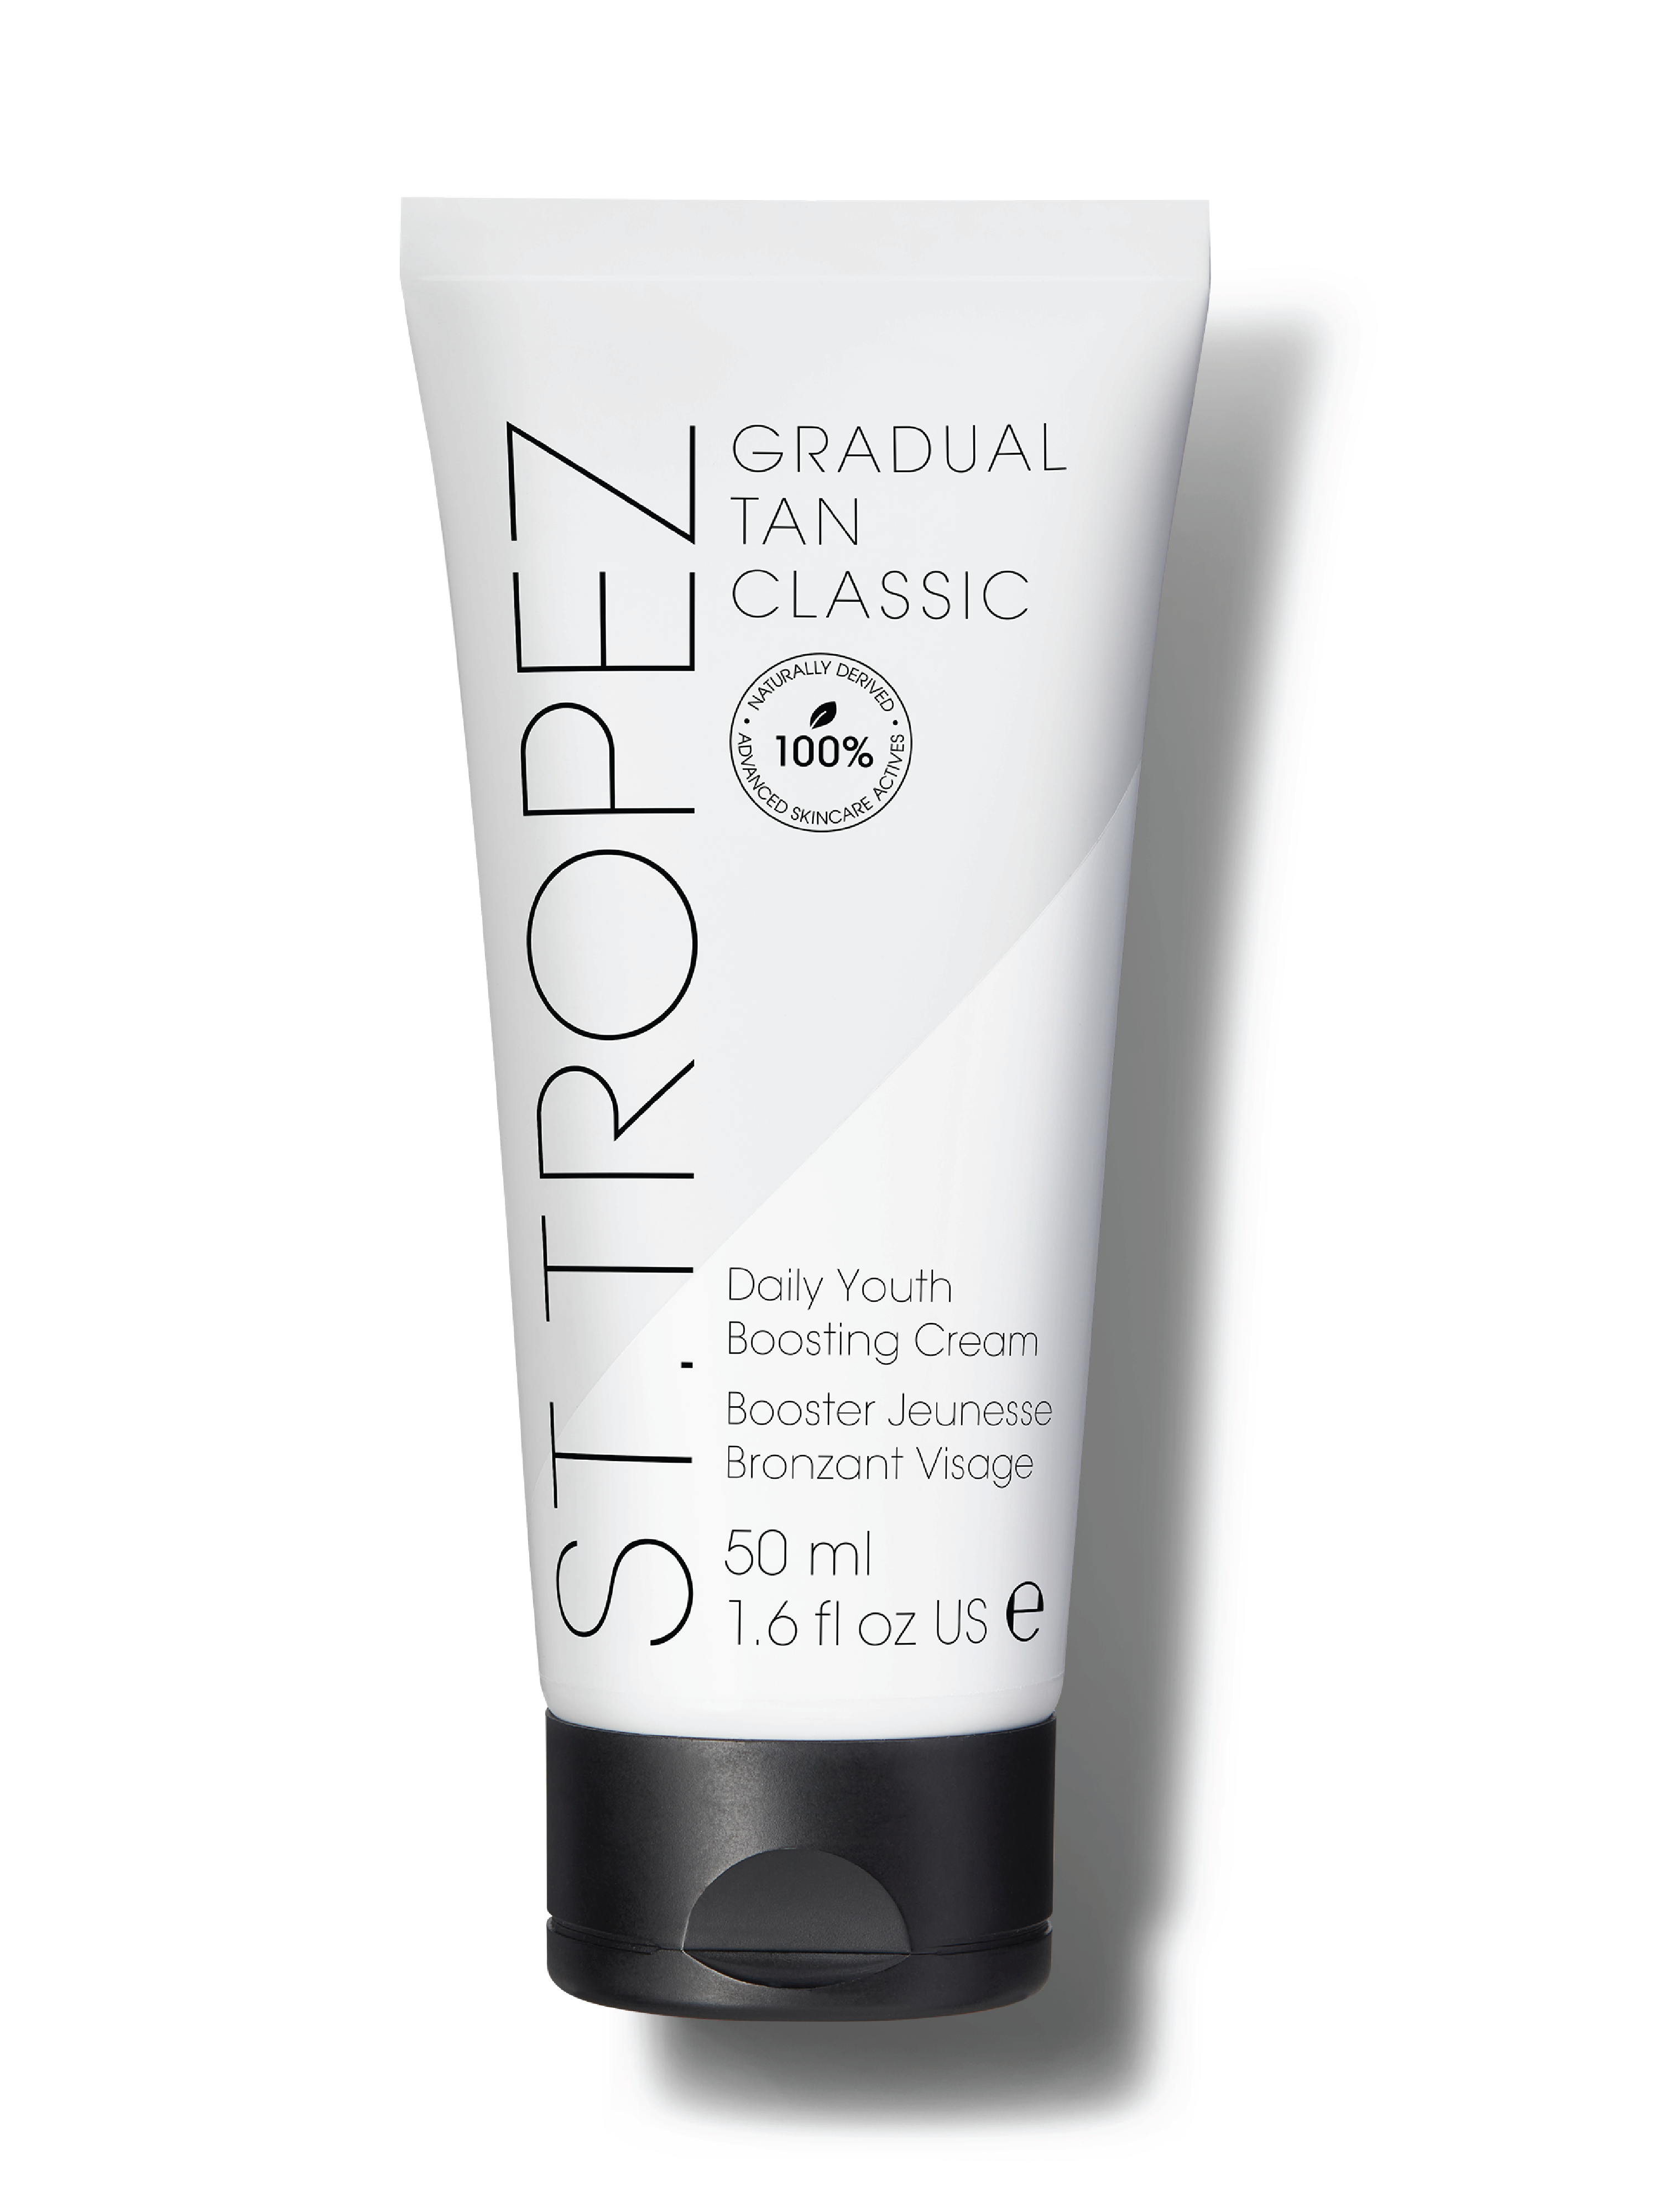 St.Tropez Gradual Tan Classic Daily Youth Boosting Face Cream, 50 ml